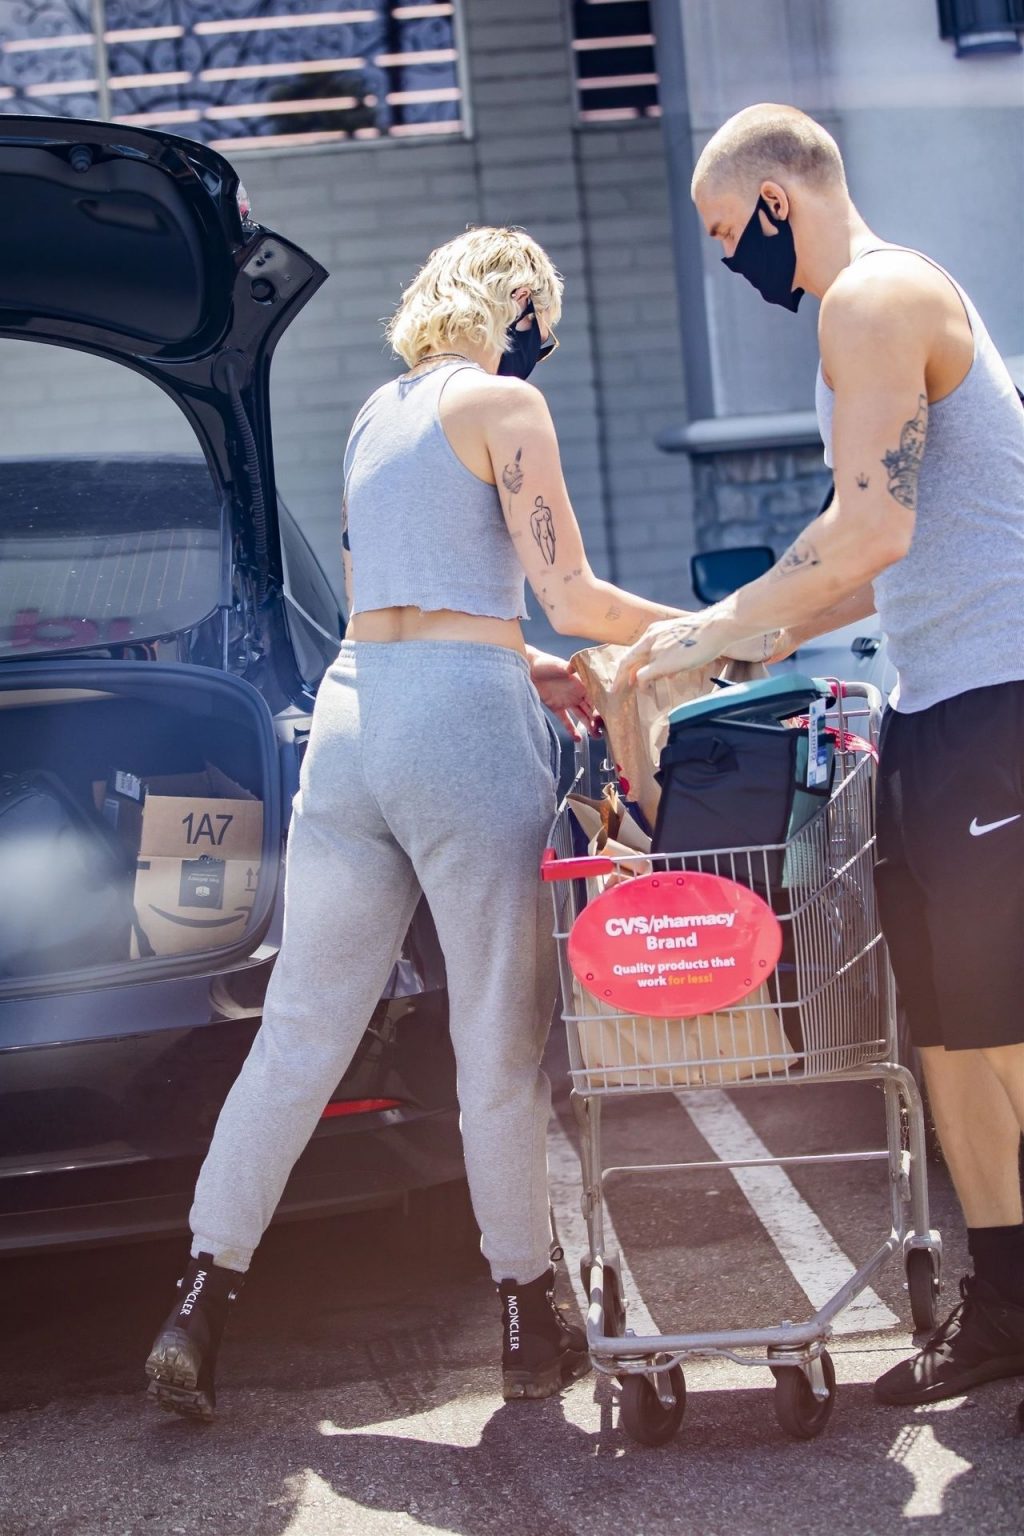 sport shopping photos Miley Cyrus Instagram celebrity braless bra 